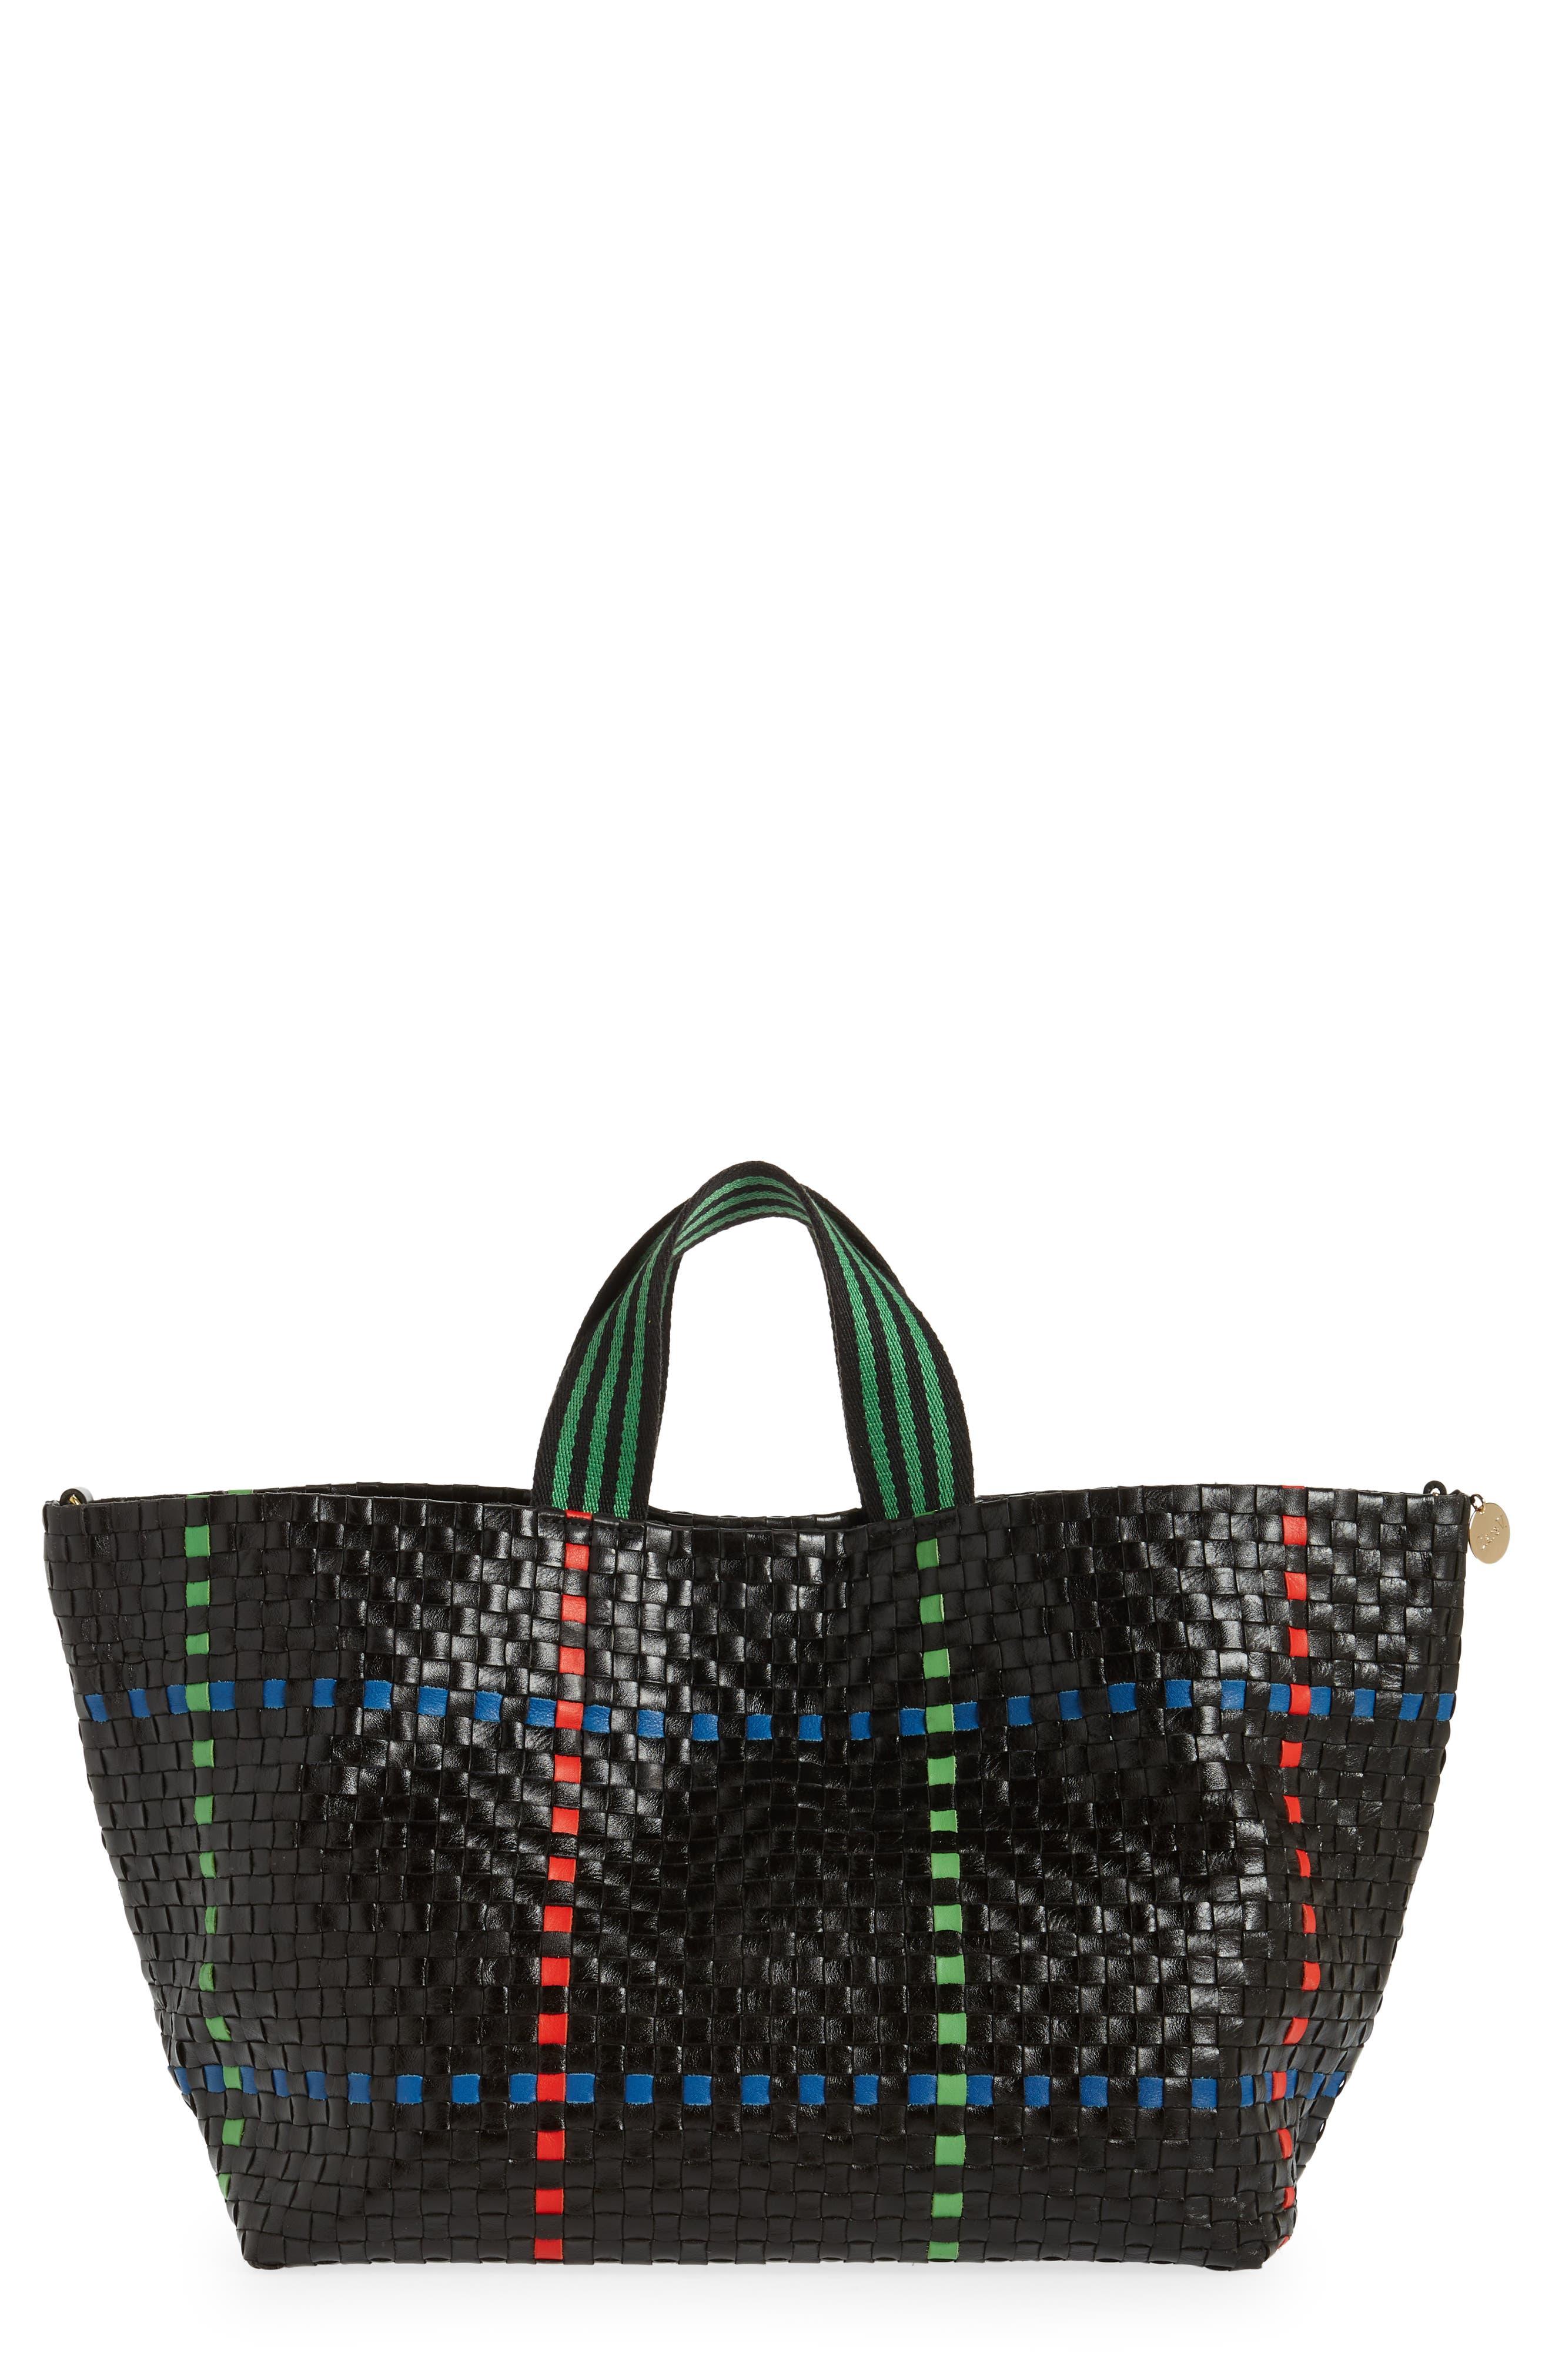 Clare V. Leather Tote Bag - Black Totes, Handbags - W2435775